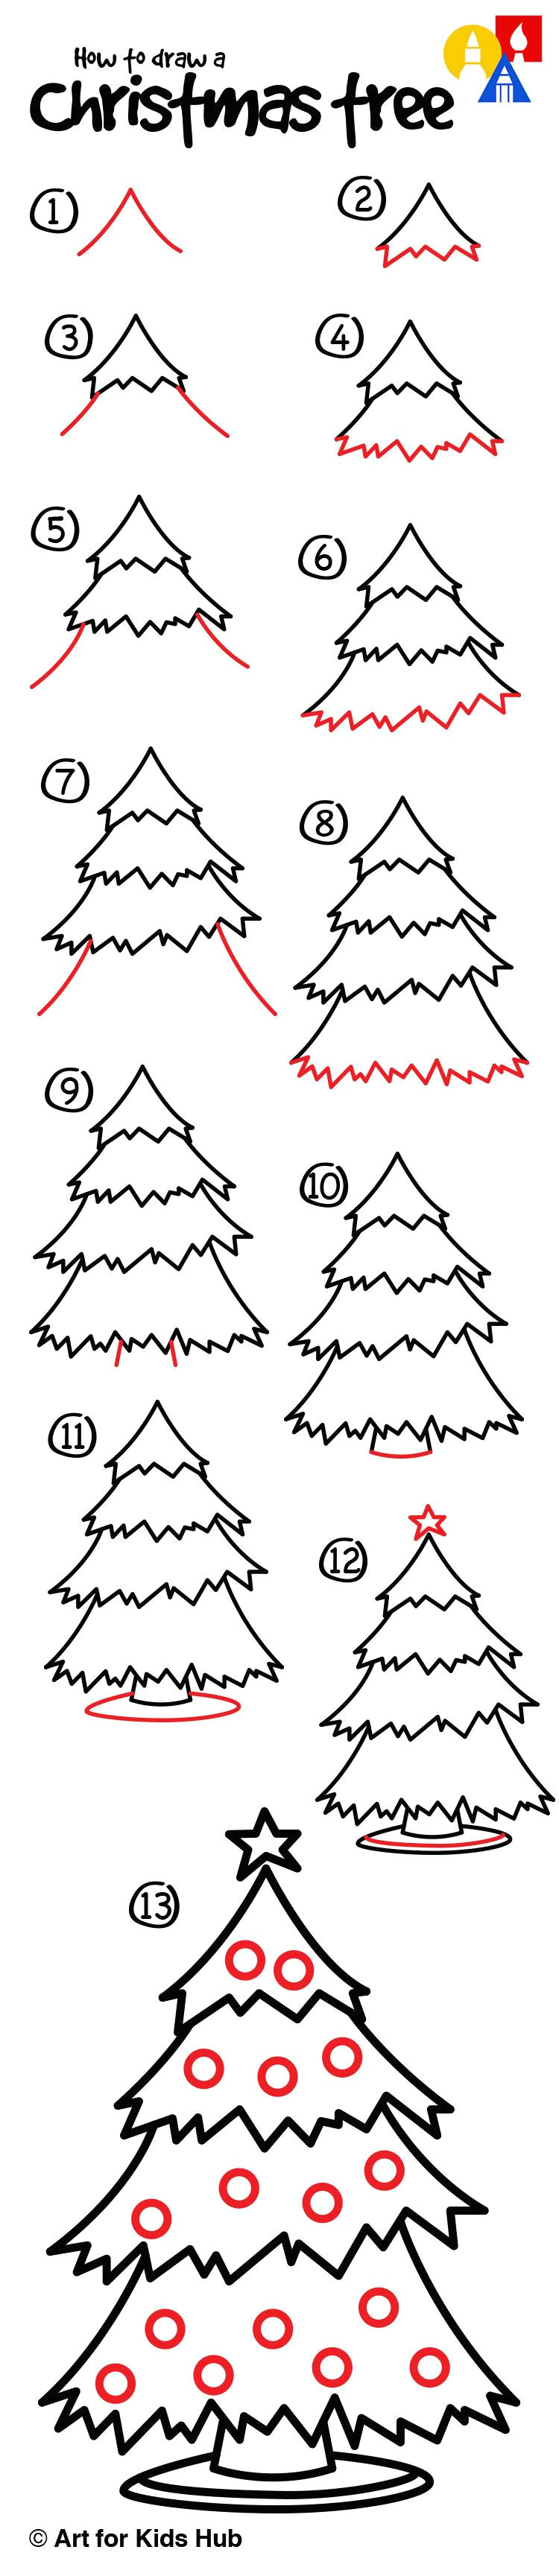 Drawing Cute Christmas Tree How to Draw A Christmas Tree Art for Kids Hub Rock Art